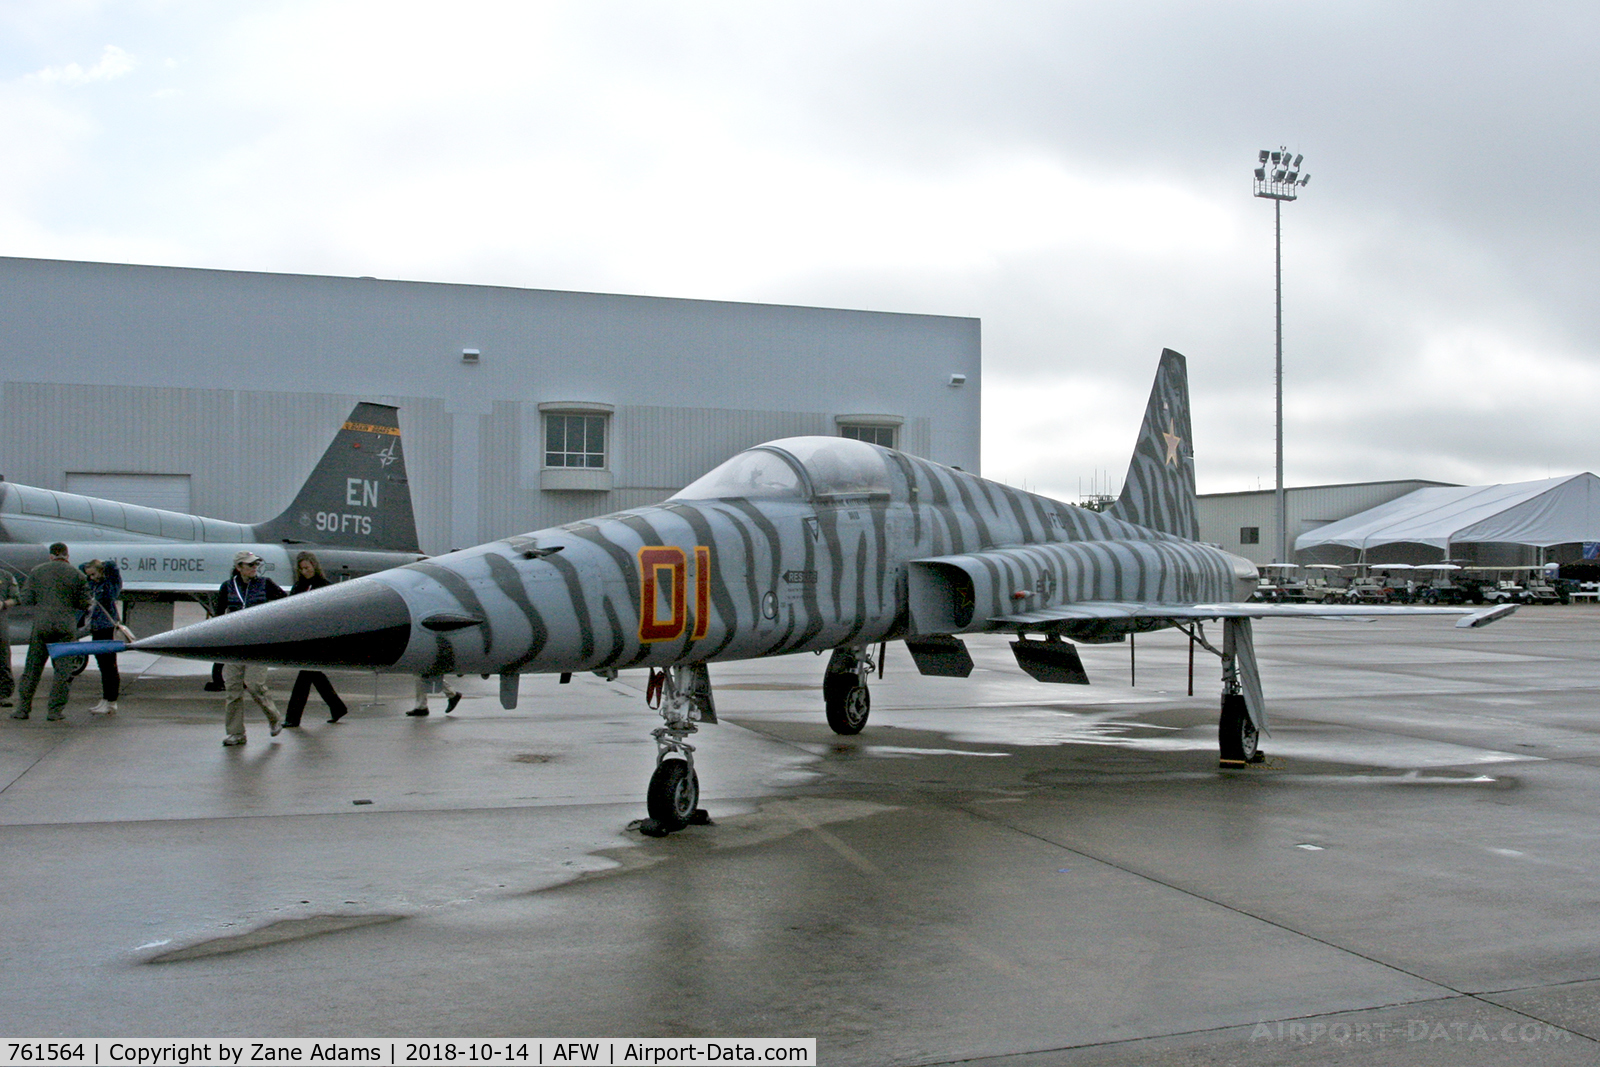 761564, 1976 Northrop F-5N Tiger II C/N L.1039, At the 2018 Alliance Airshow - Fort Worth, Texas